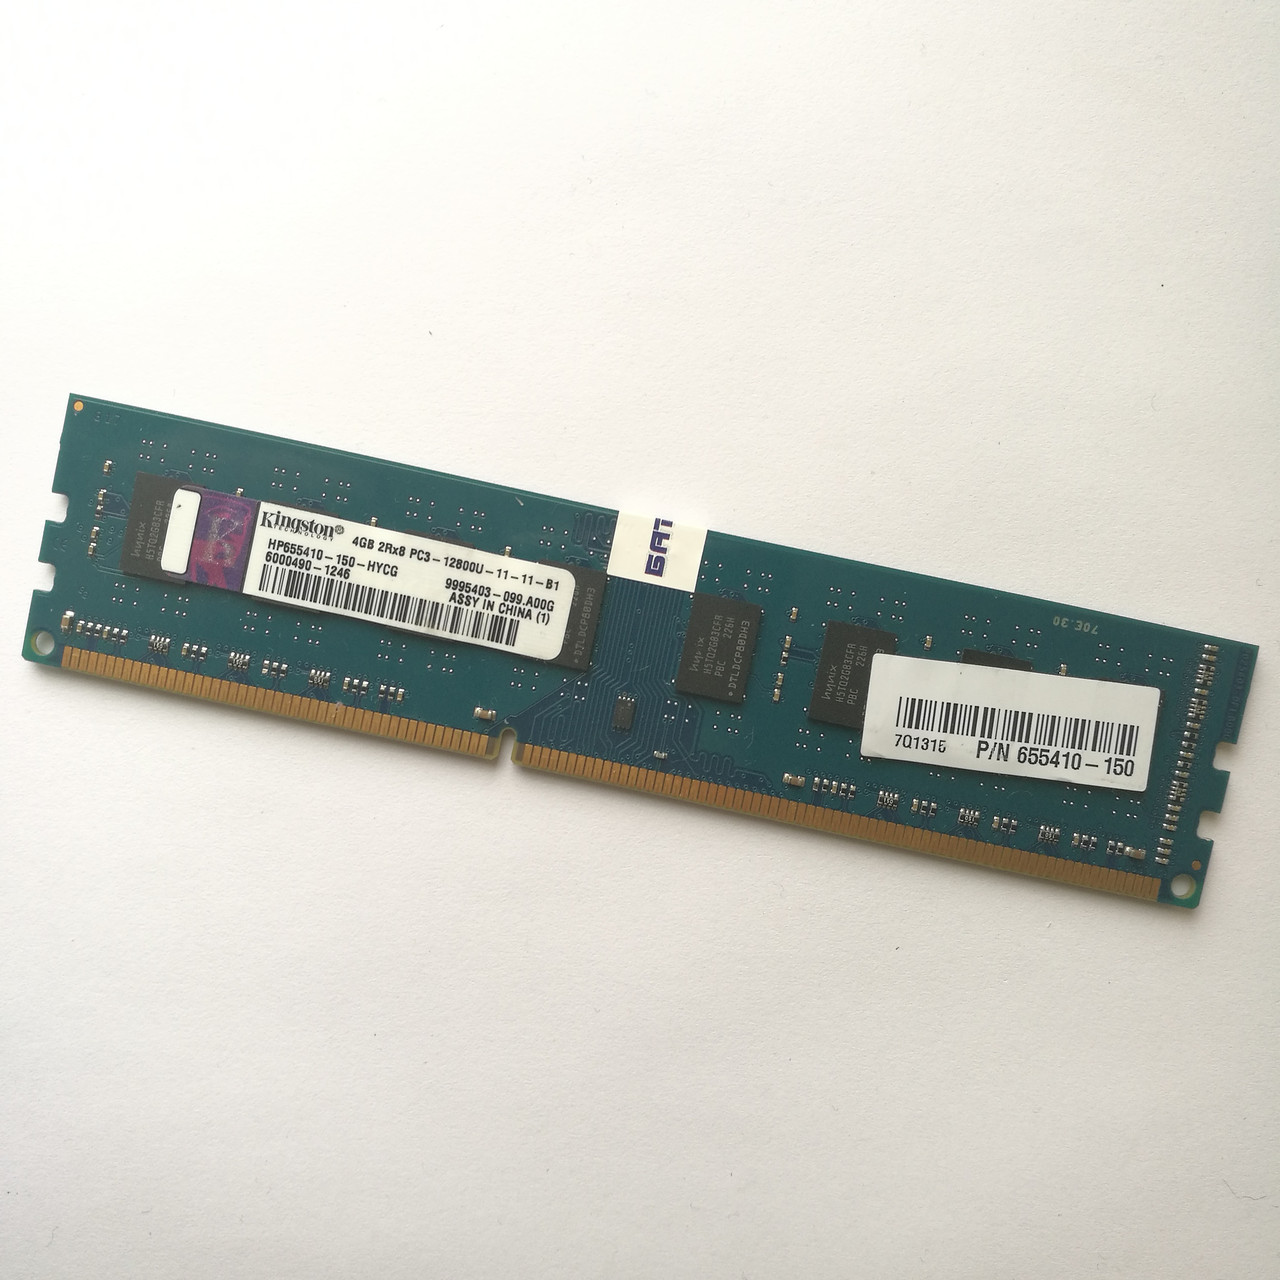 Оперативна пам'ять Kingston DDR3 4Gb 1600MHz PC3-12800 2R8 CL11 (HP655410-150-HYCG) Б/В, фото 1